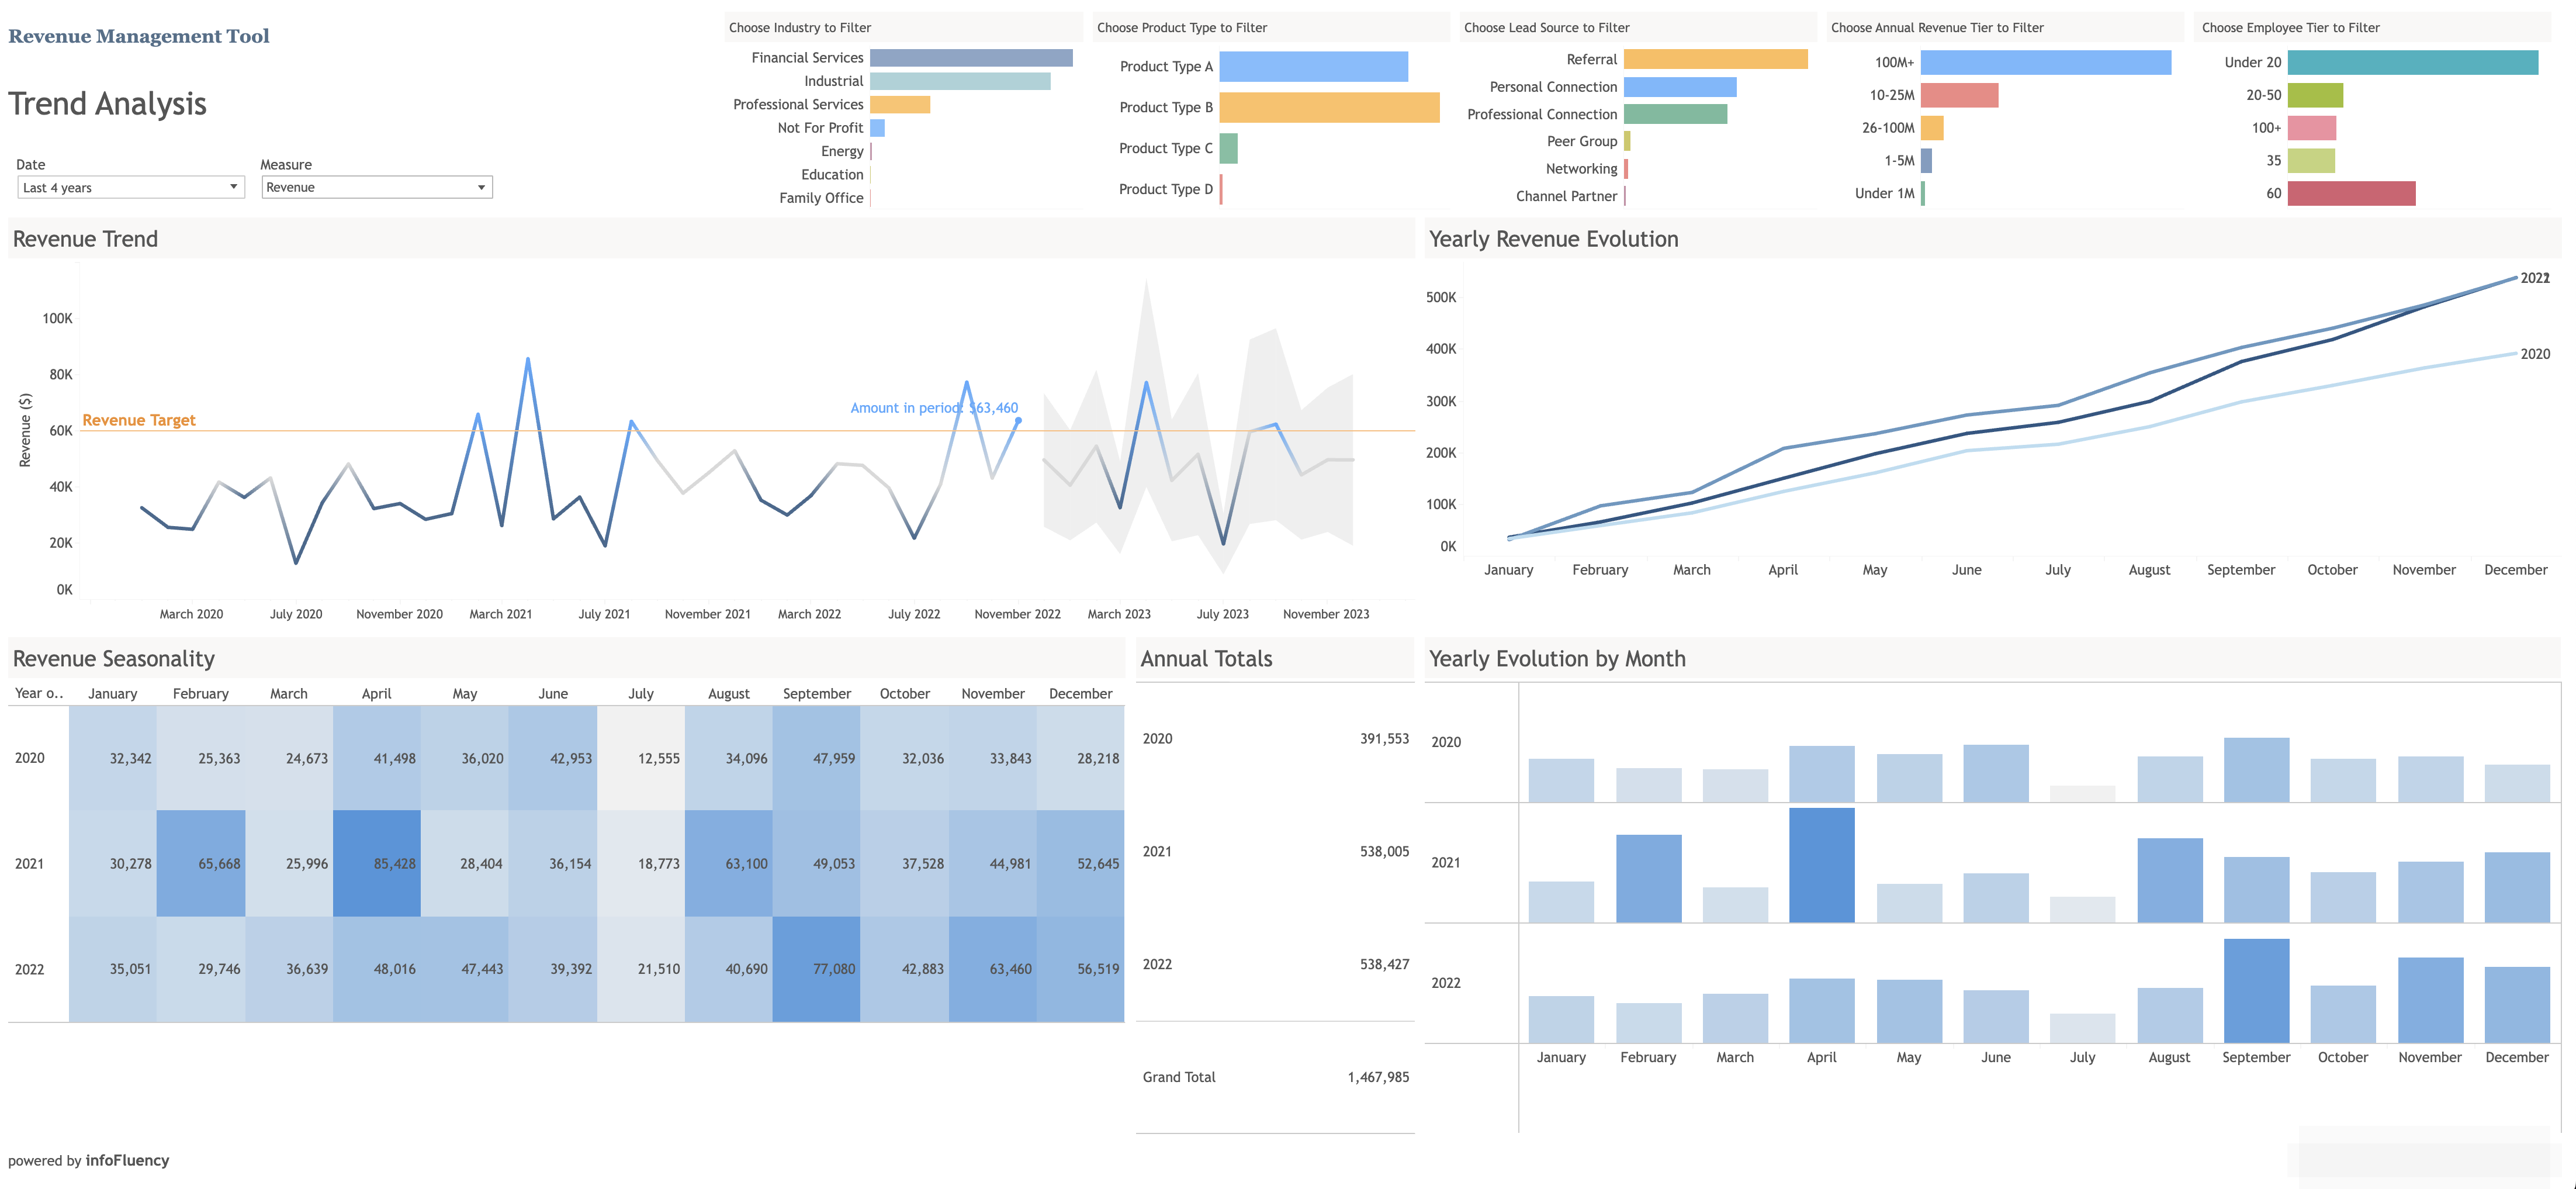 Revenue Management Tool Revenue Trend Analysis